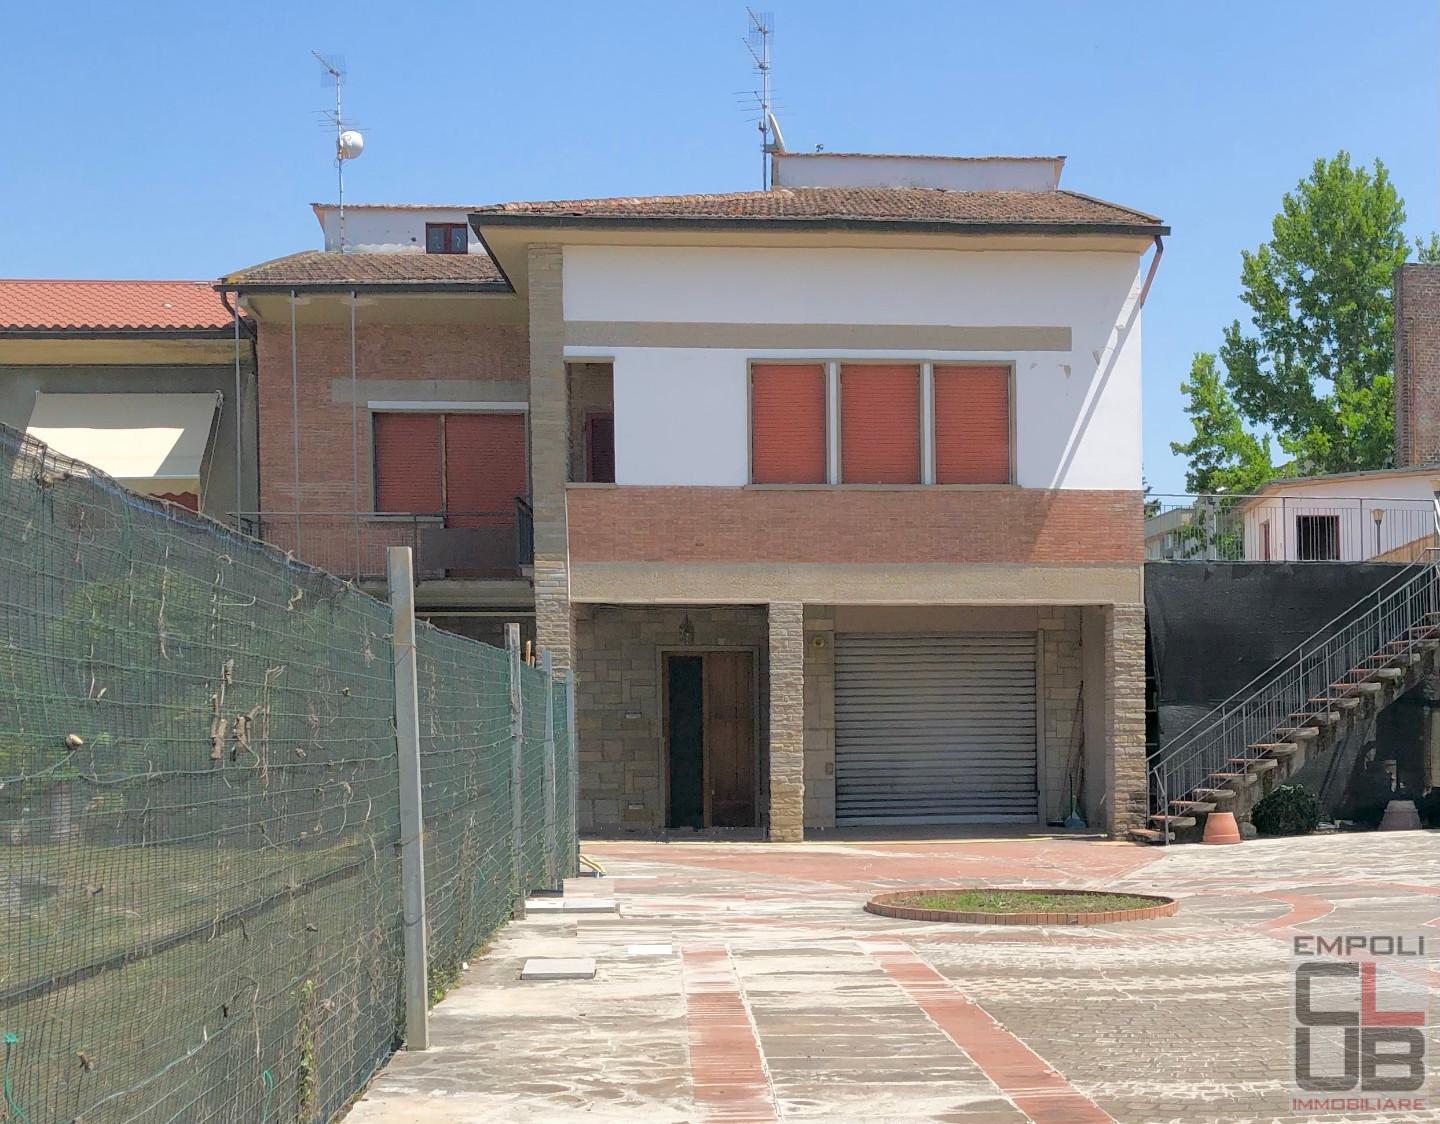 Semi-detached house for sale in Empoli (FI)